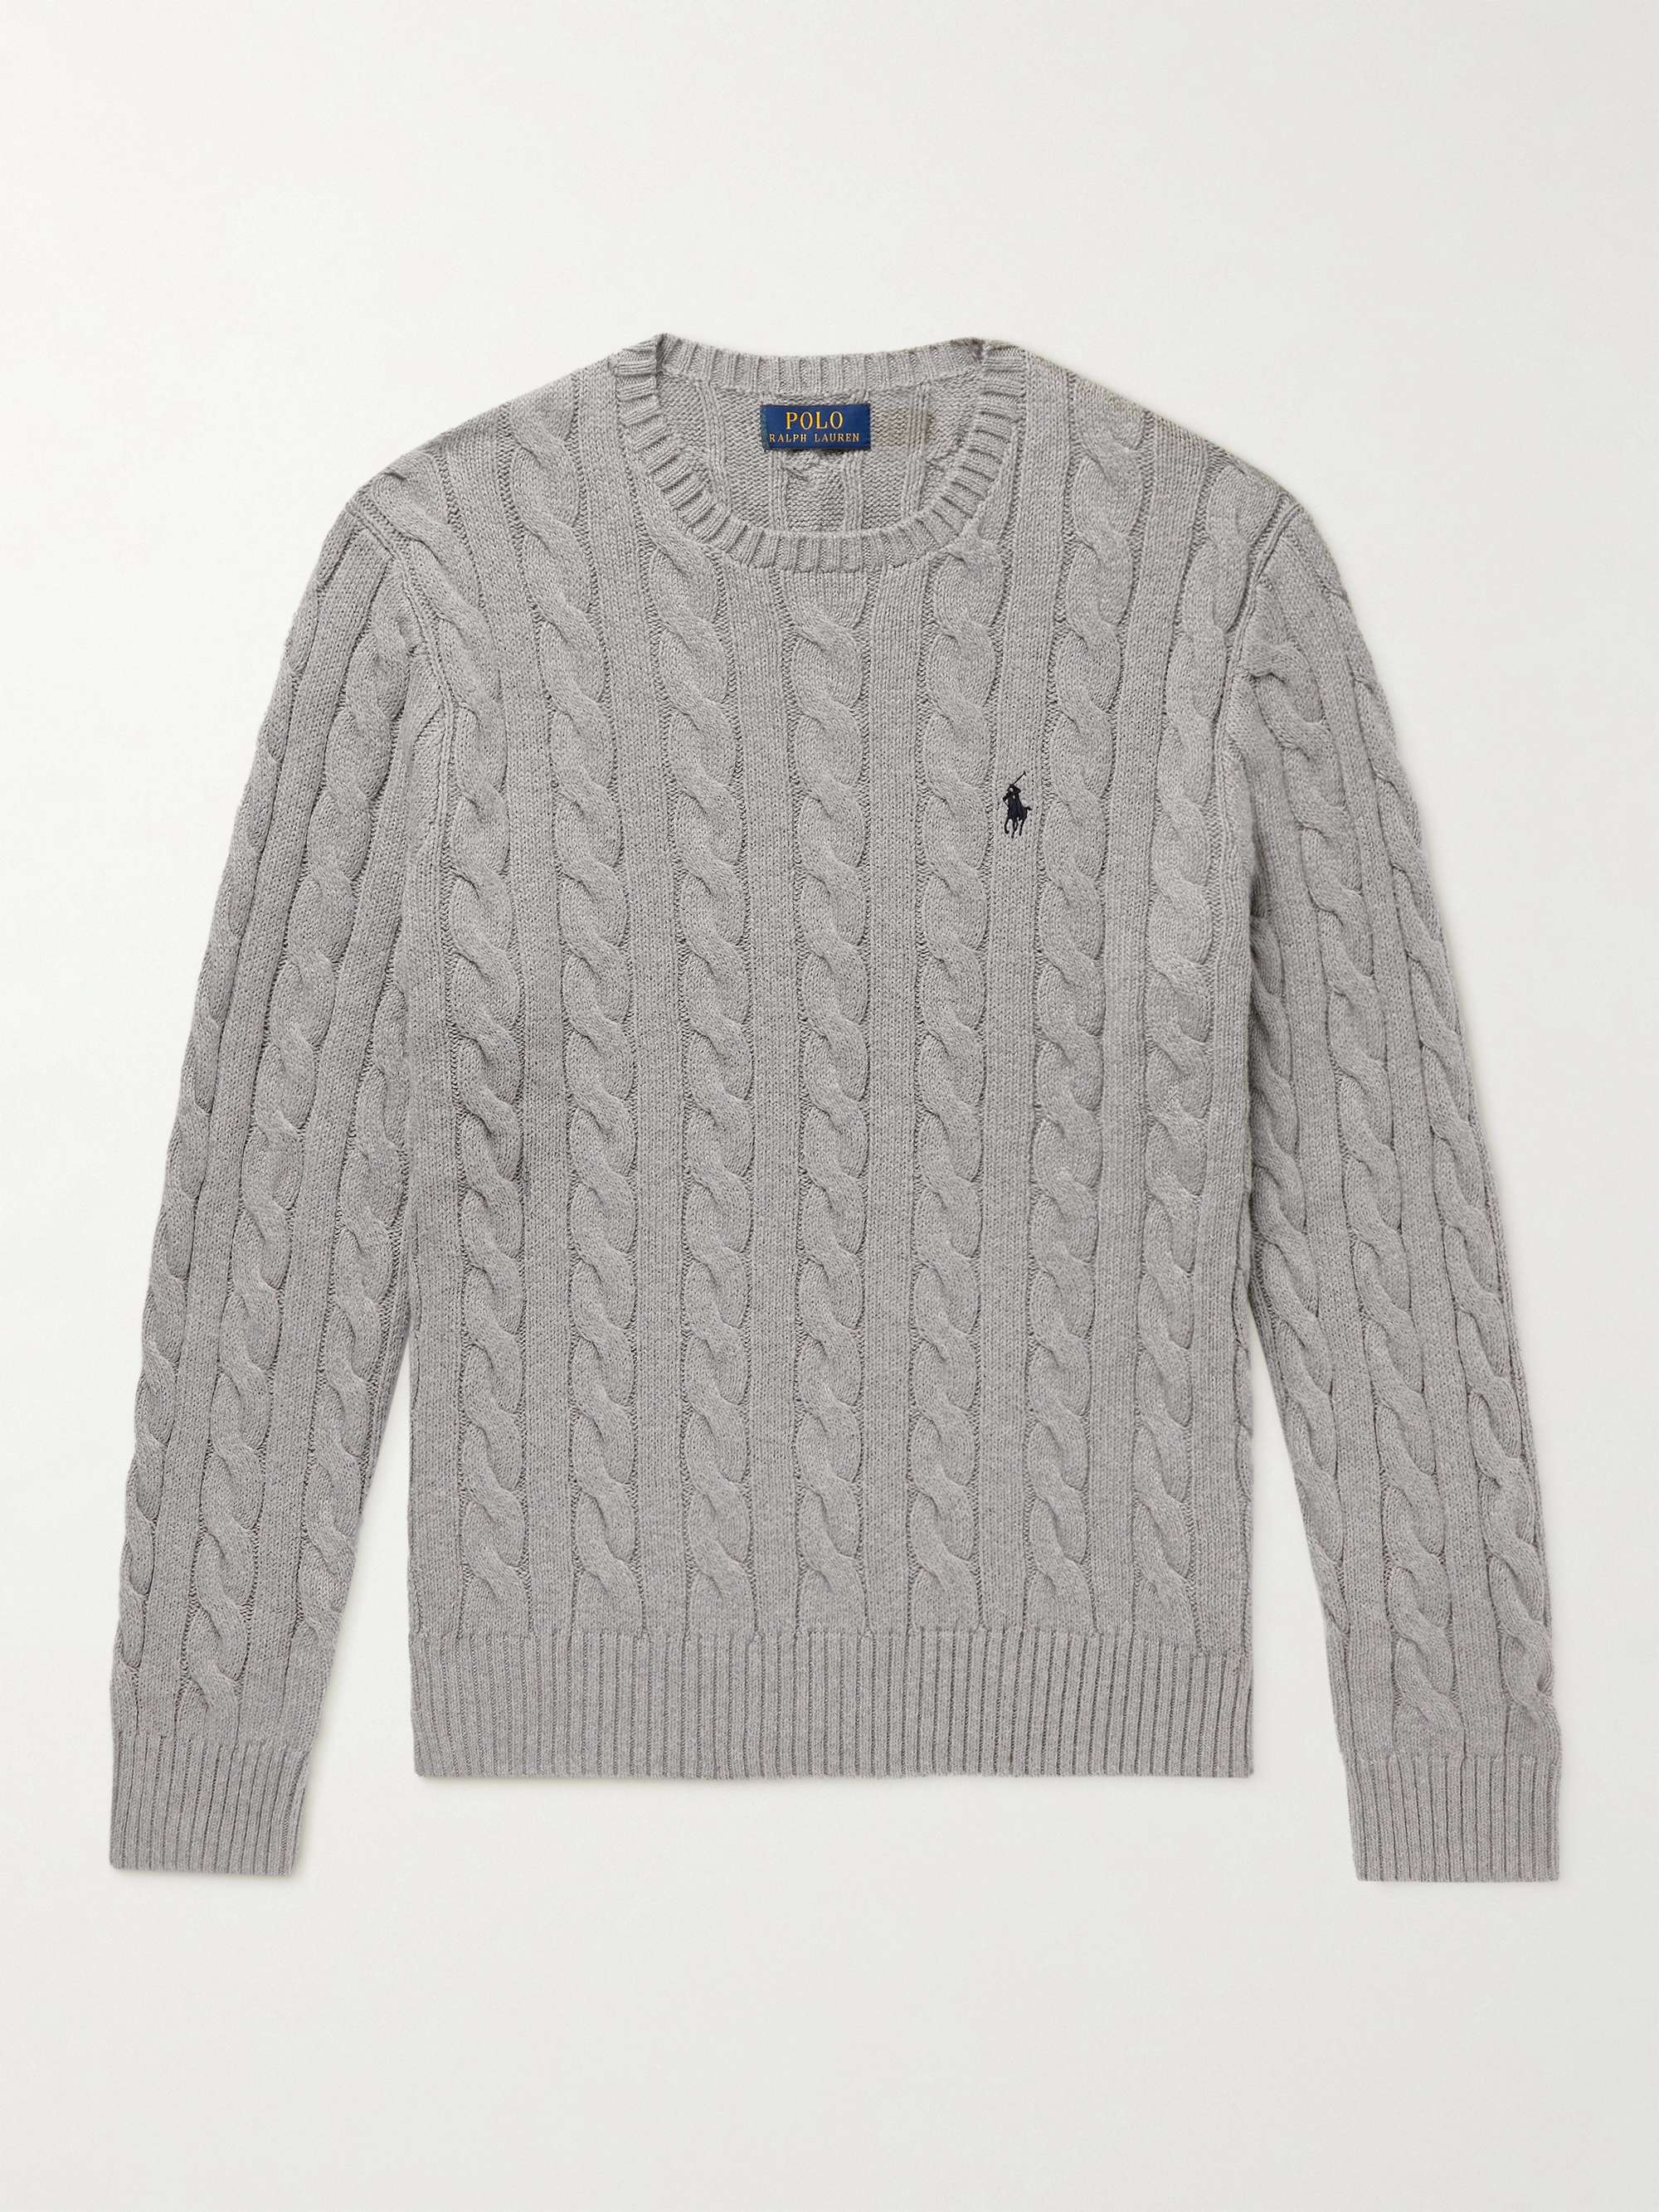 POLO RALPH LAUREN Cable-Knit Cotton Sweater for Men | MR PORTER